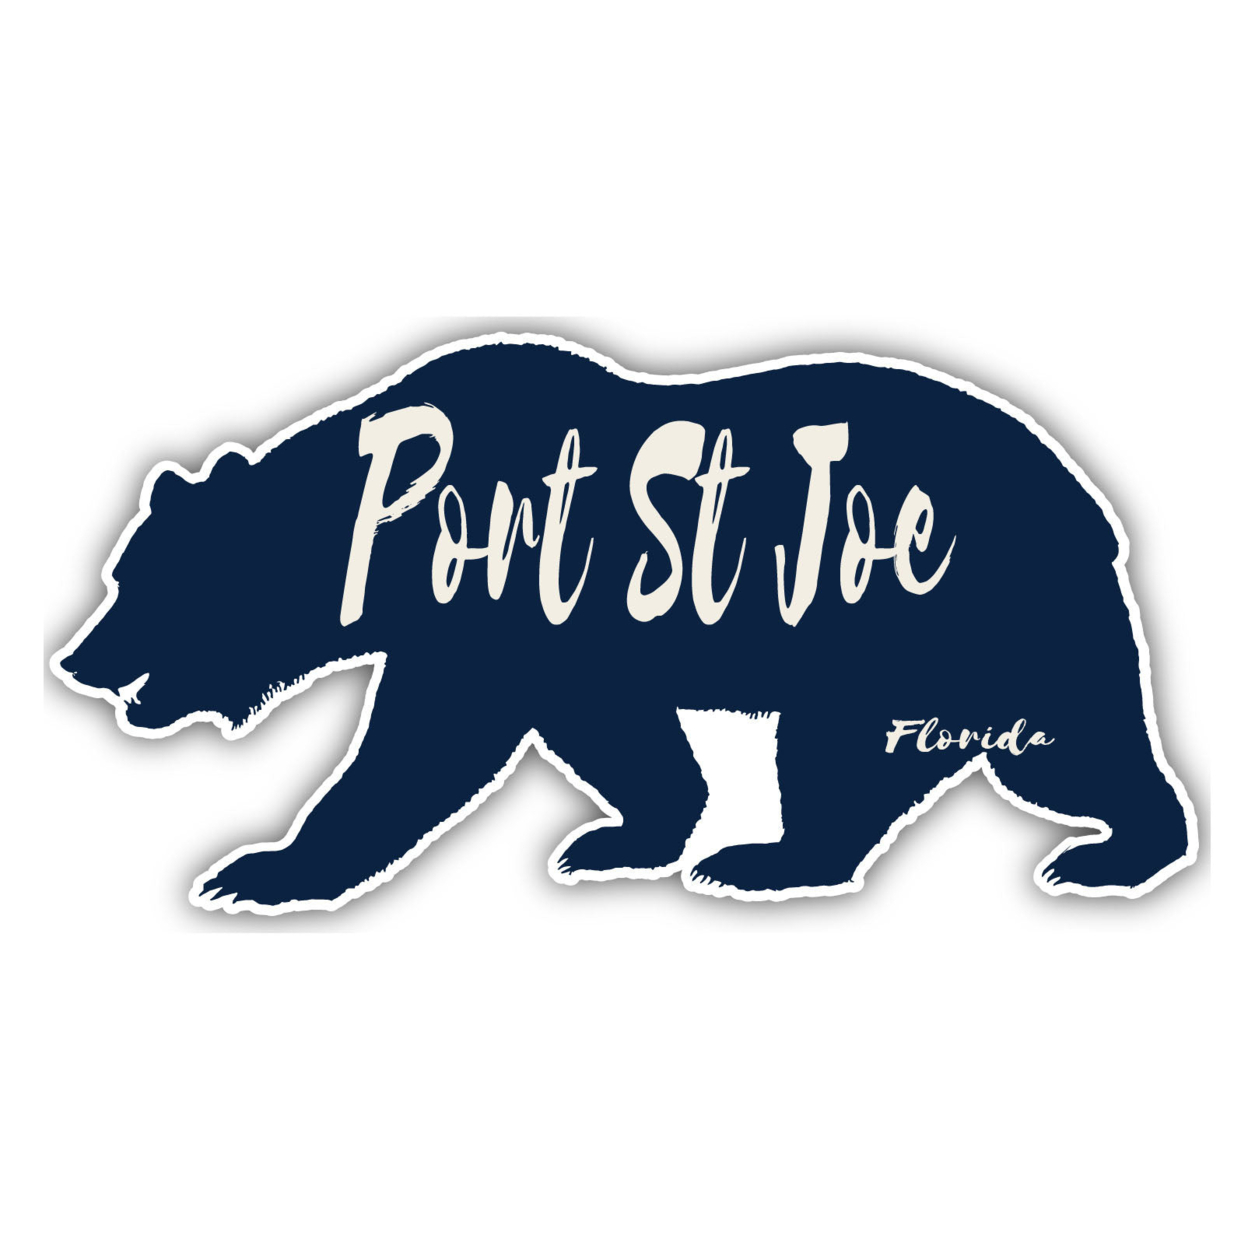 Port St Joe Florida Souvenir Decorative Stickers (Choose Theme And Size) - Single Unit, 4-Inch, Bear